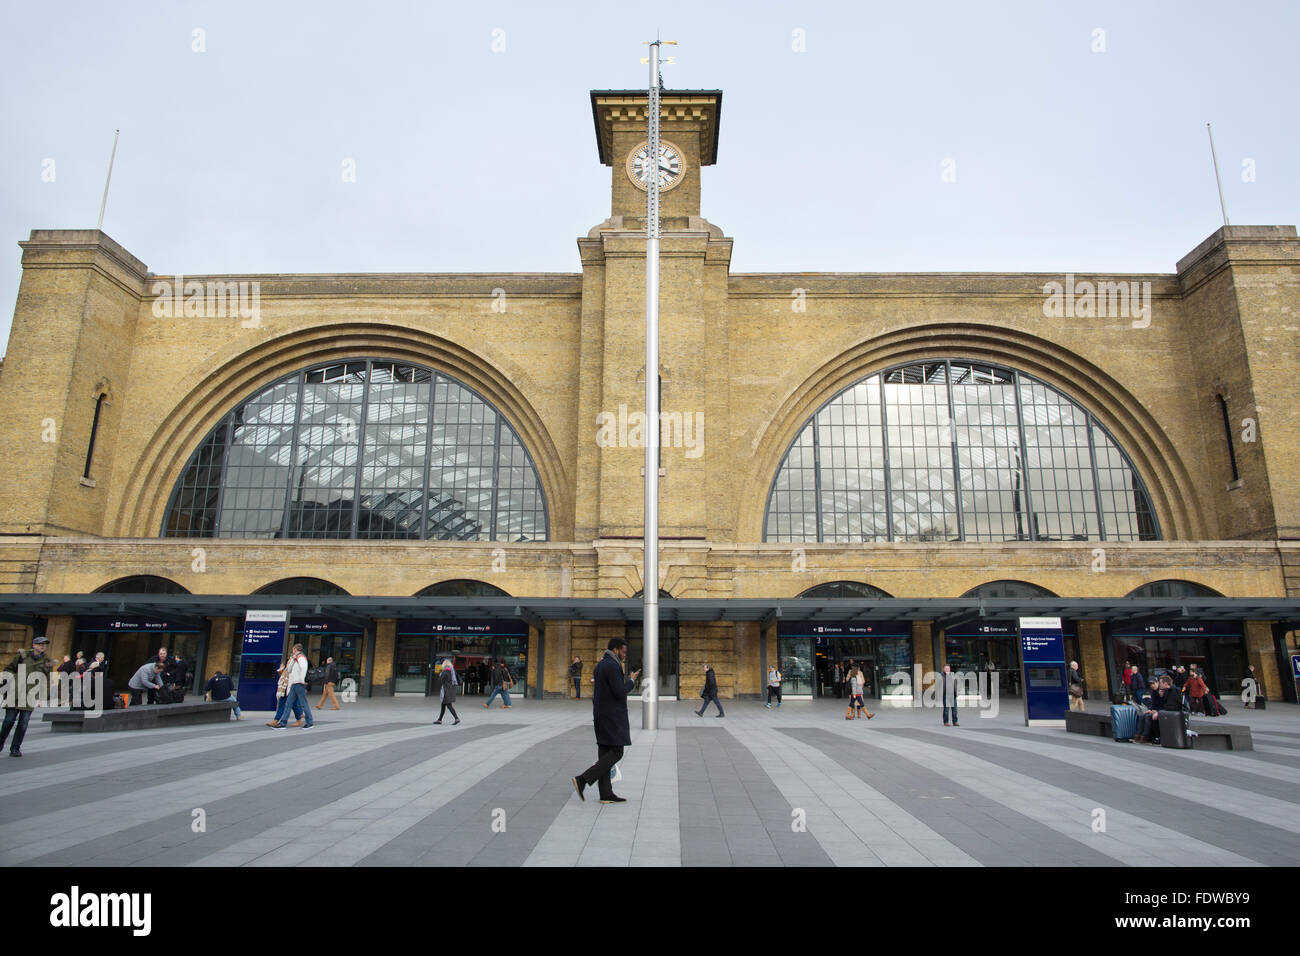 Kings Cross Square Regeneration, 75000sq ft neu gestalteten Bahnhofsplatz und umgebenden Bereich, Nord-London, England, UK Stockfoto